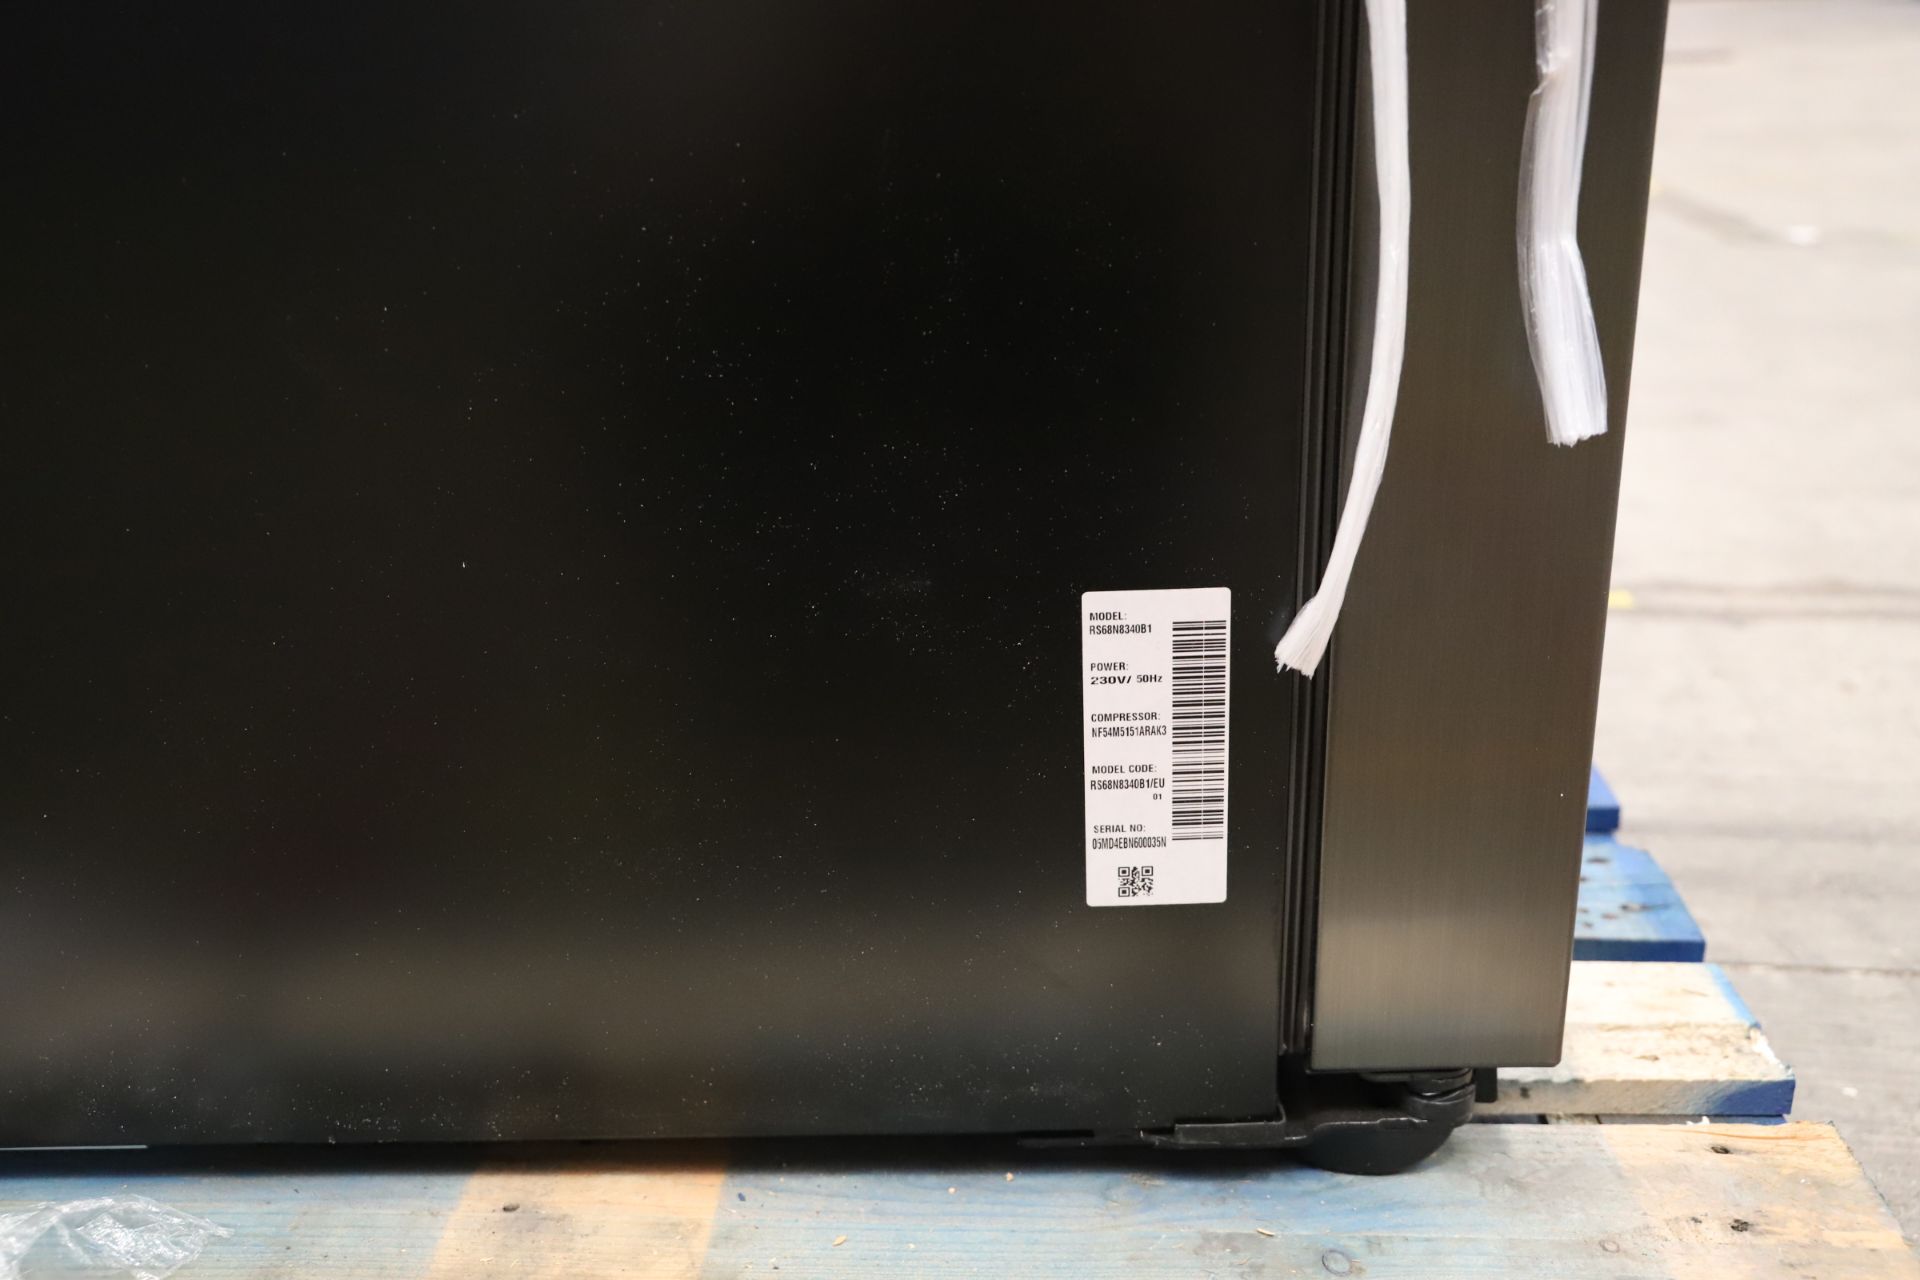 Pallet of 1 Samsung Water & Ice Fridge freezer. Latest selling price £1,799.99 - Image 10 of 10